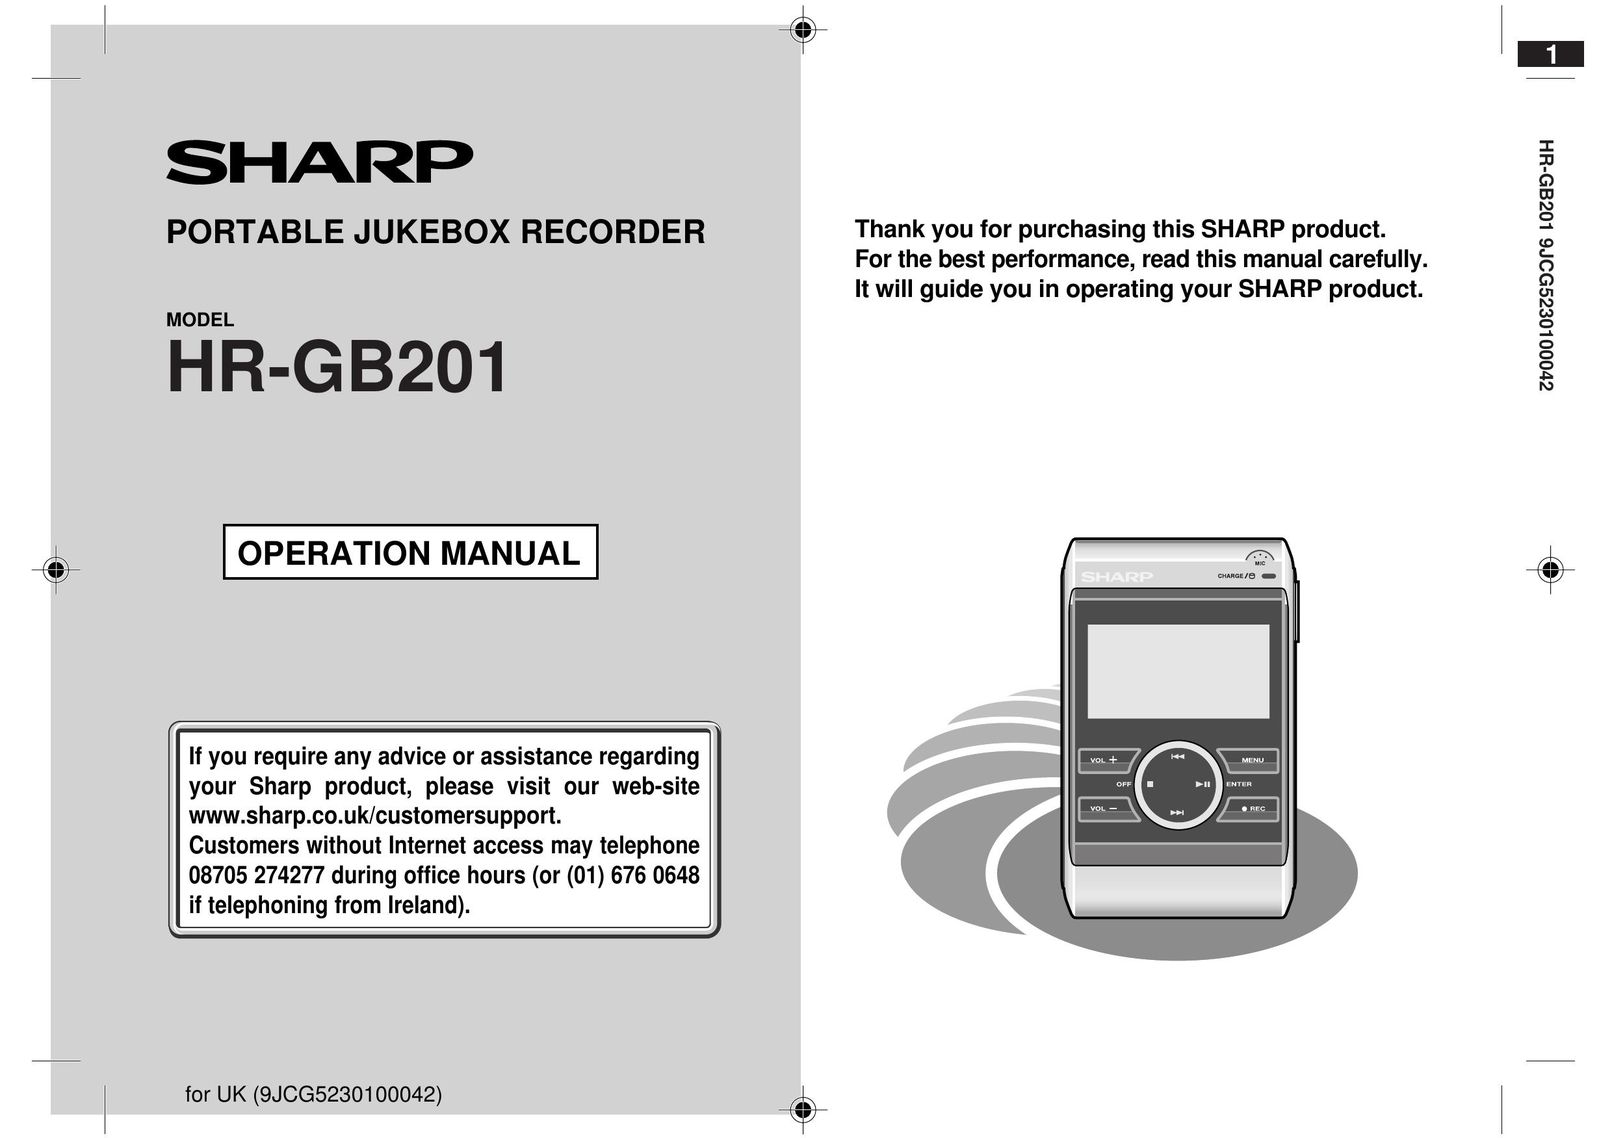 Sharp GB201 DVR User Manual